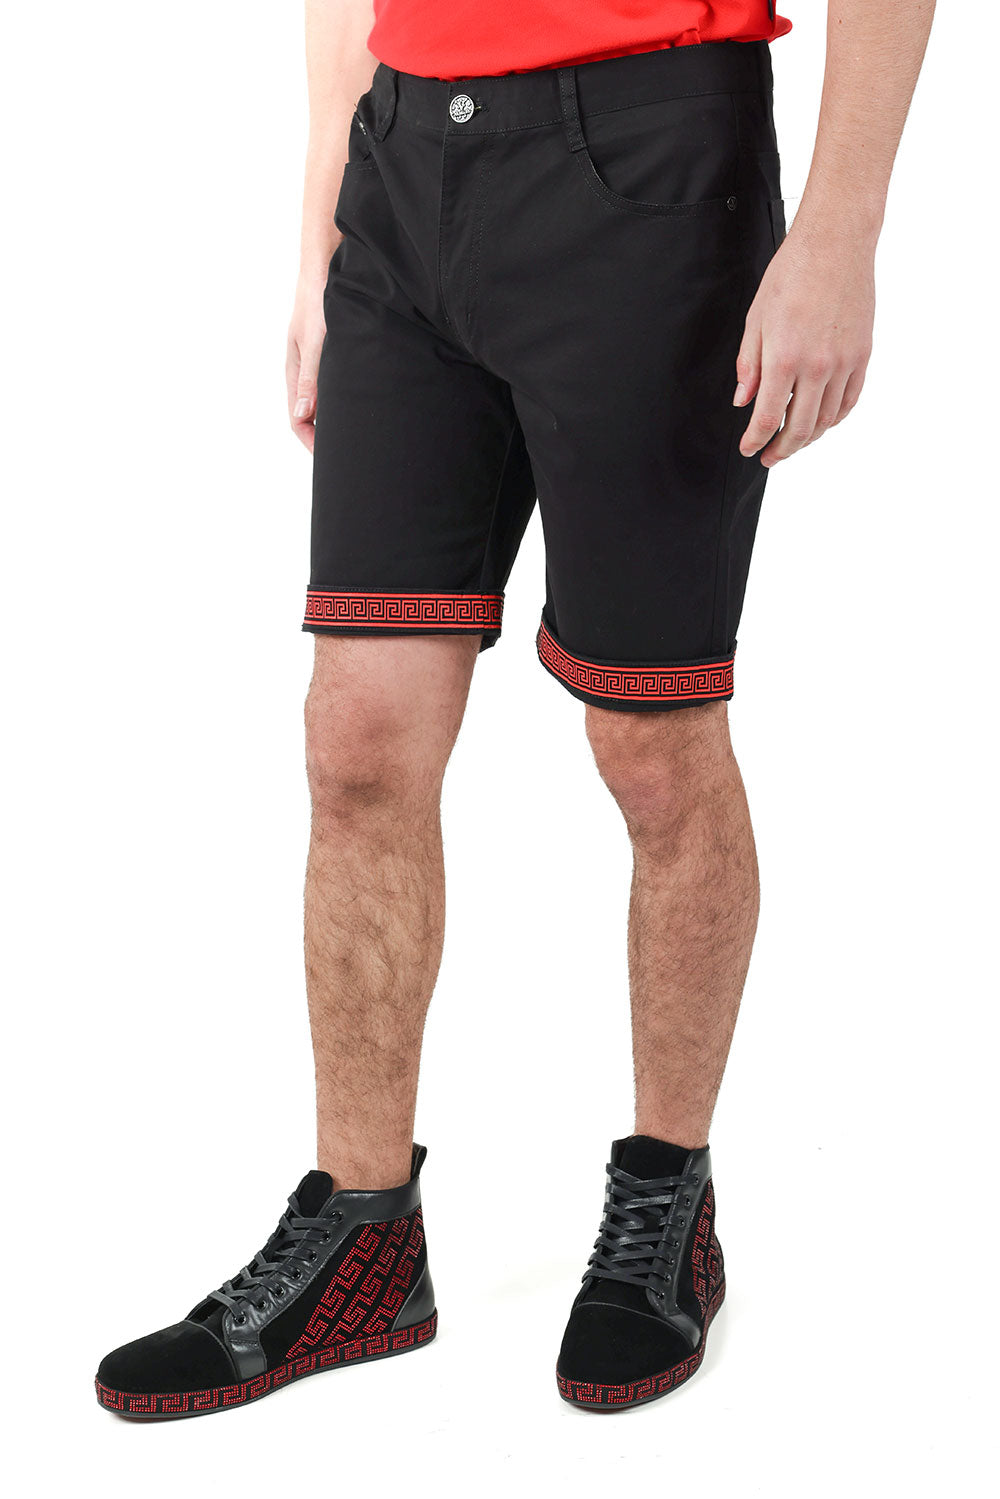 Barabas Men's Greek Key Printed Solid Color Luxury Shorts SVC4001 Black Red